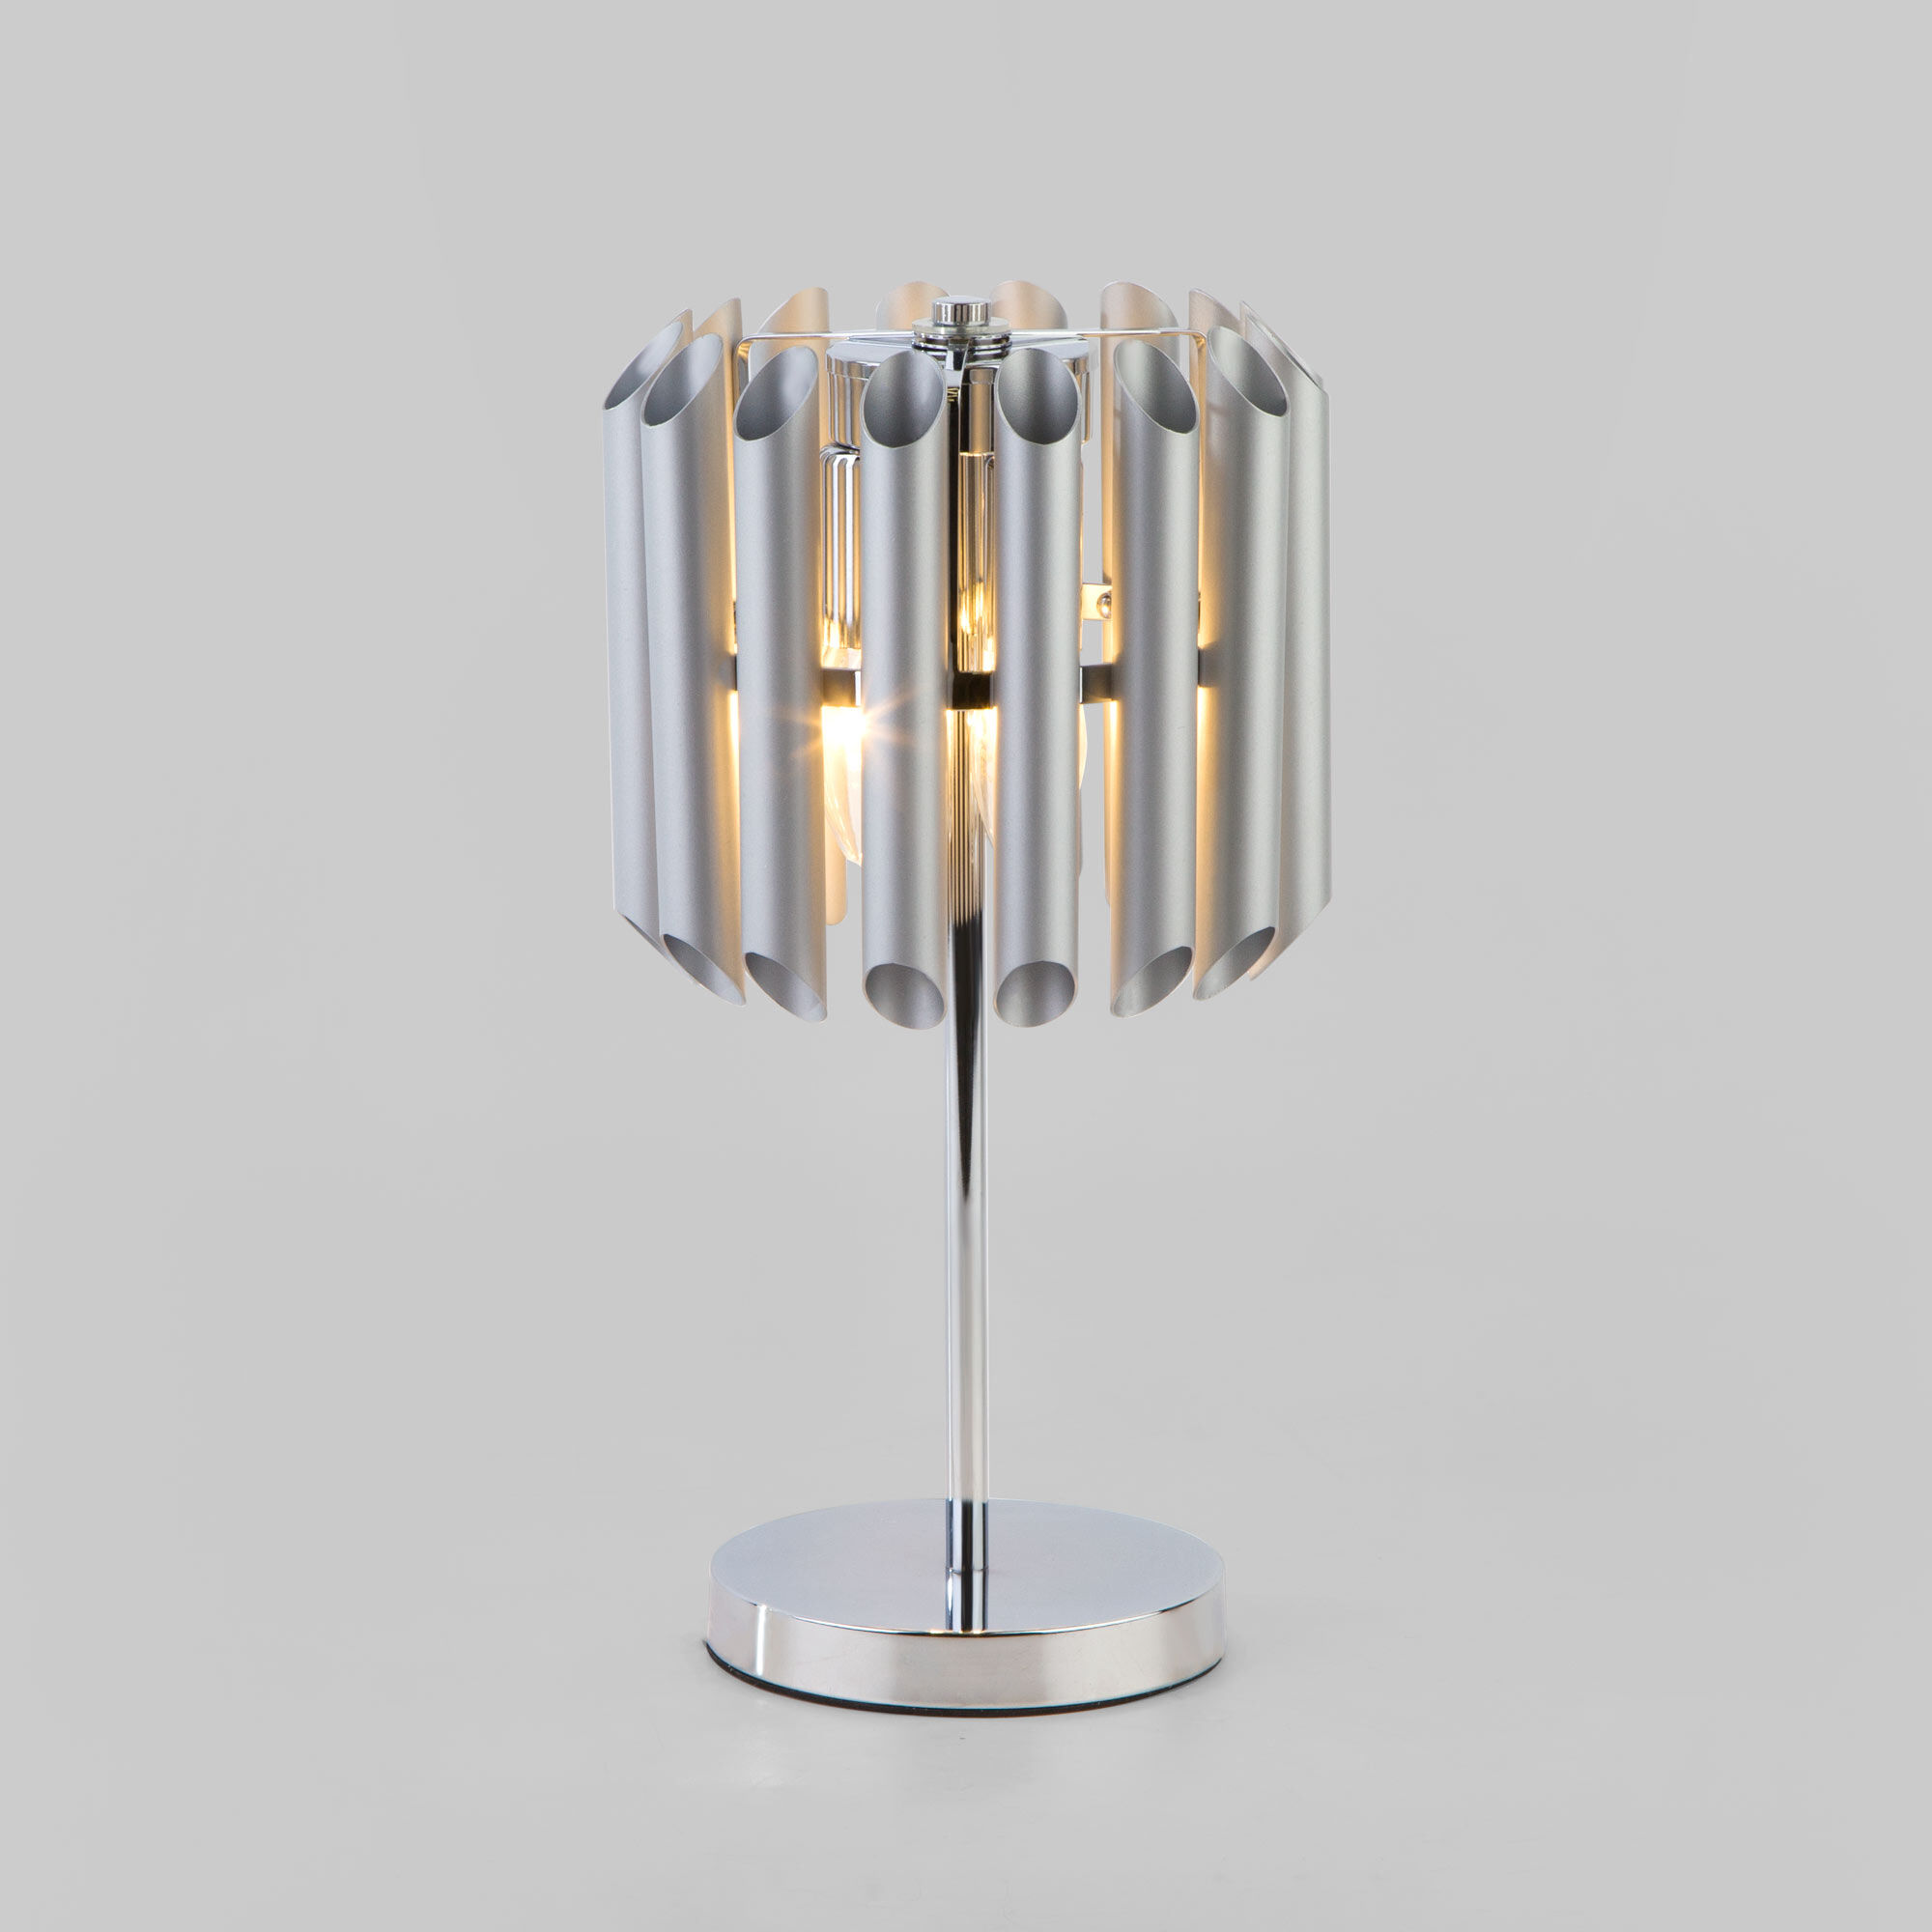 Настольная лампа в стиле лофт Bogate's Castellie 01107/3 серебро. Фото 1